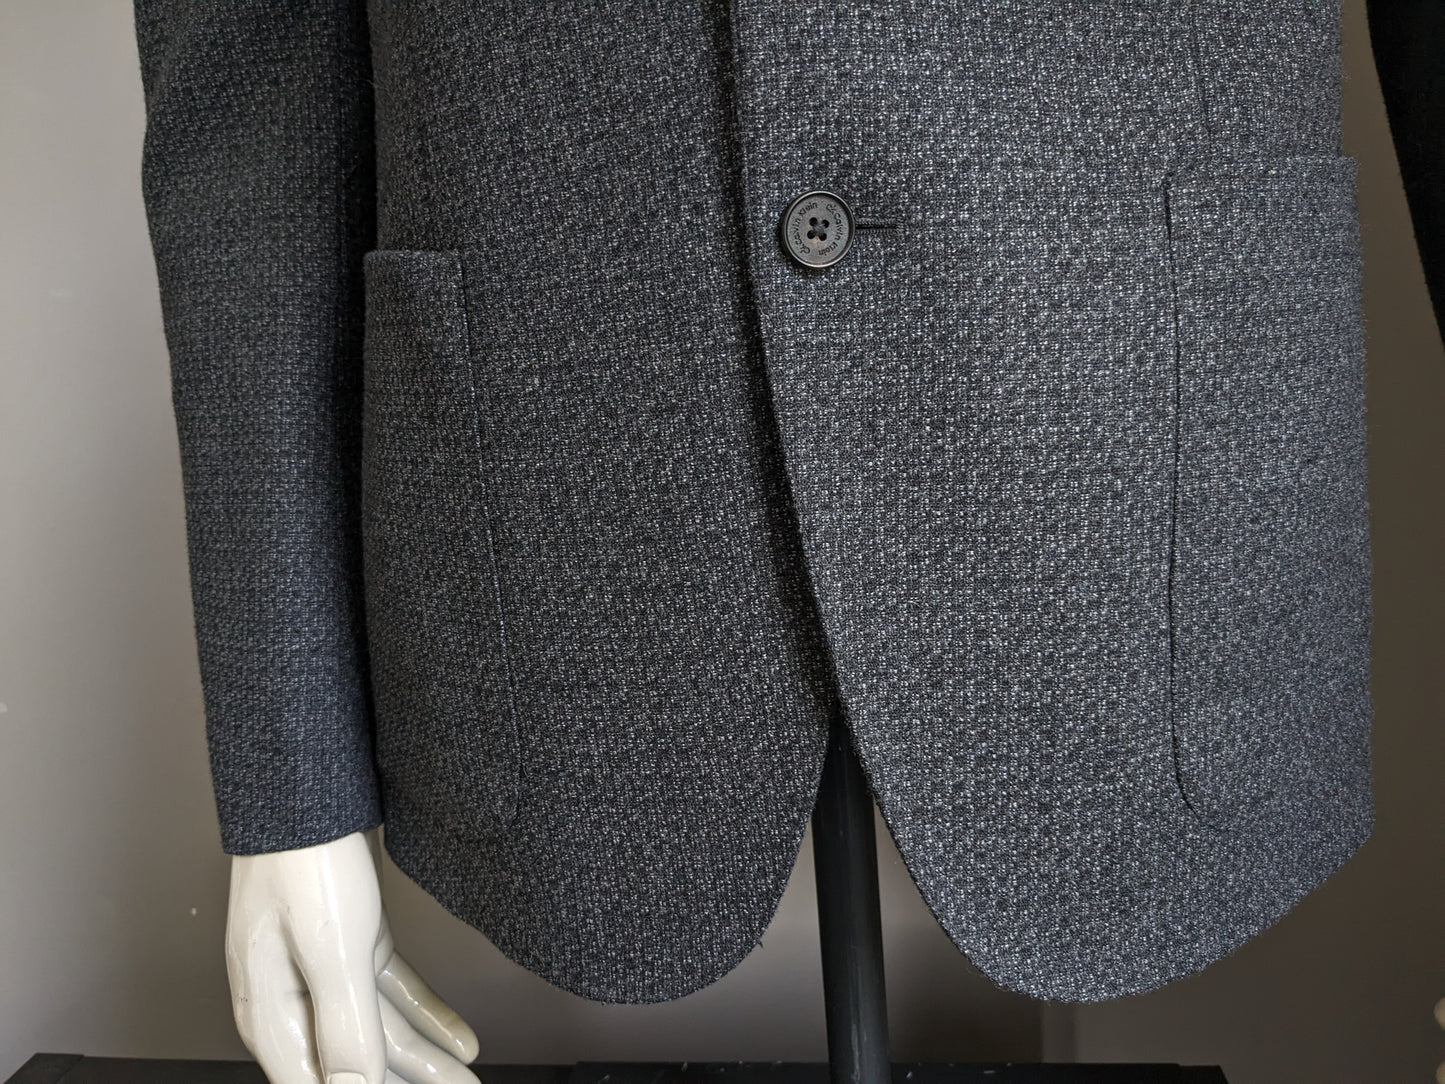 CK Calvin Klein woolen jacket. Gray black mixed motif. Size 50 / M. Slim Fit Line.